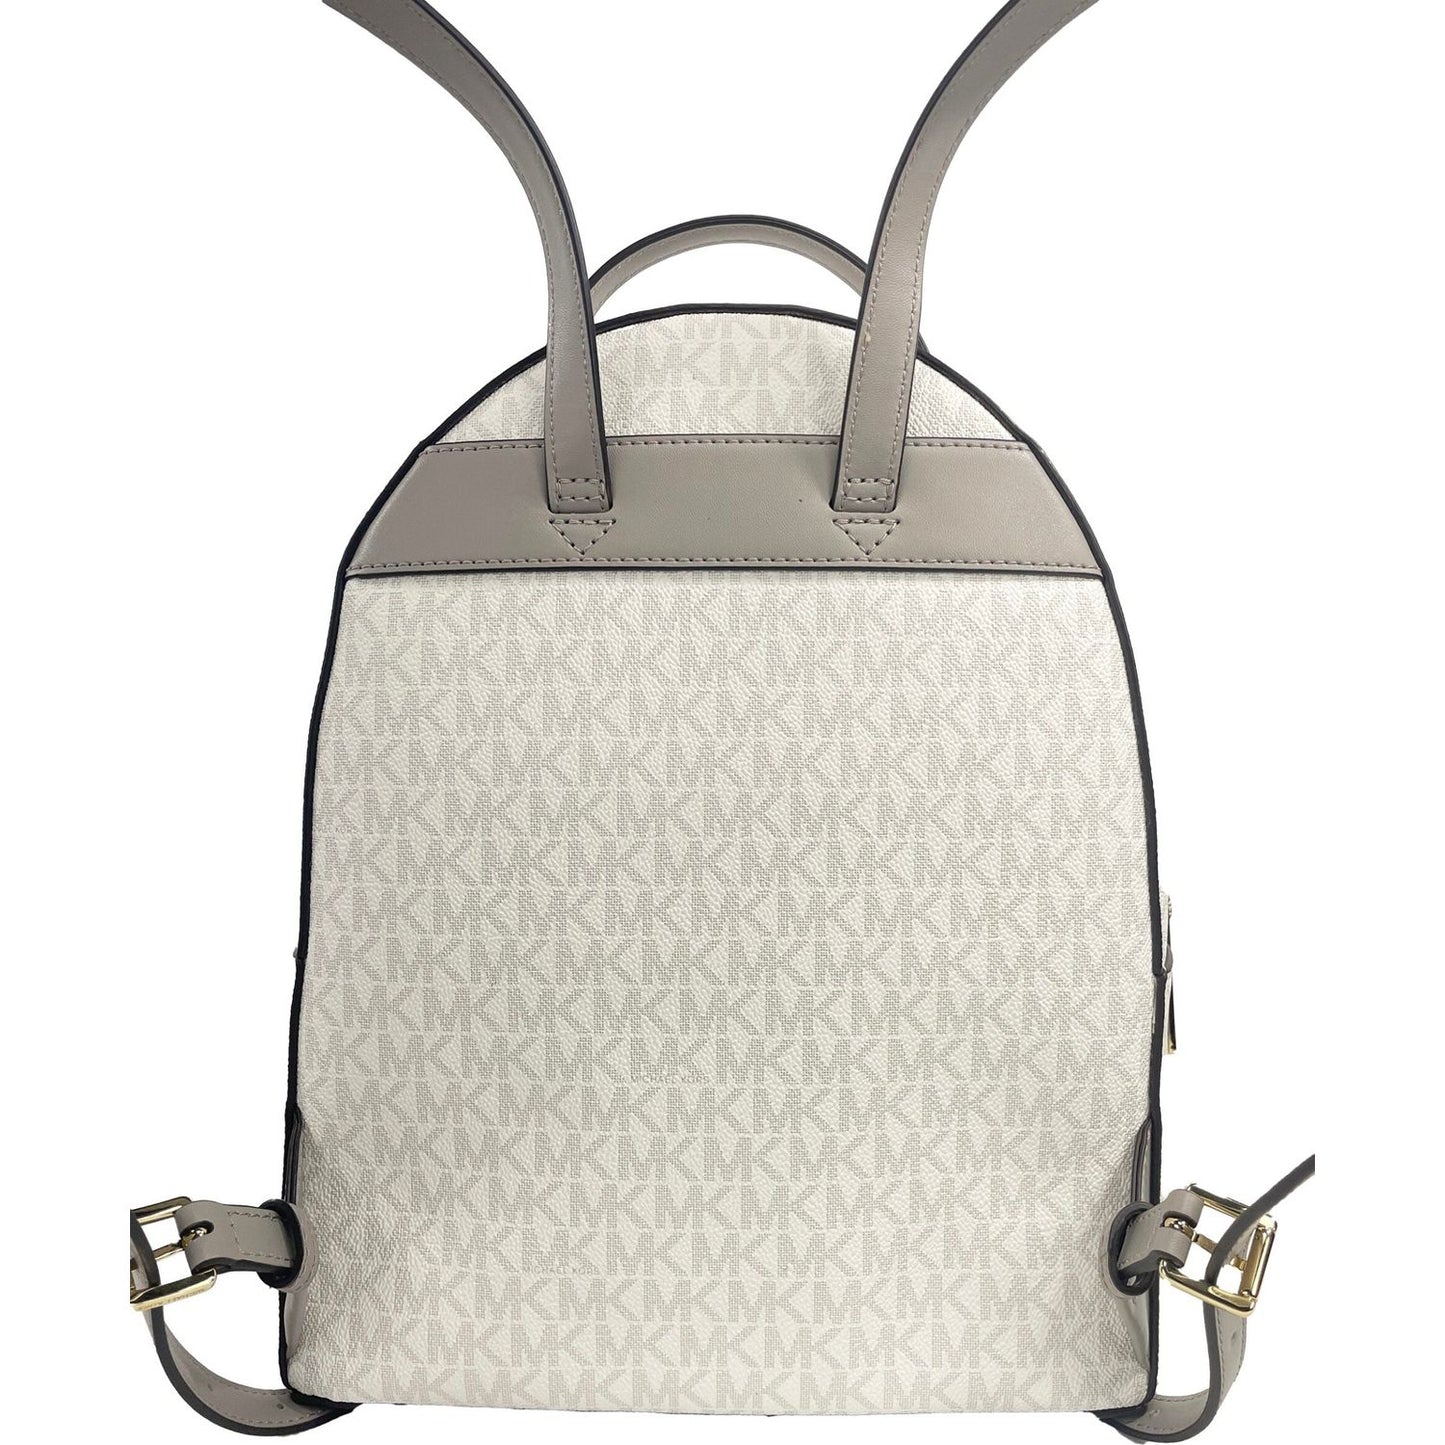 Michael Kors Sheila Medium Front Pocket Backpack Bag sheila-medium-front-pocket-backpack-bag